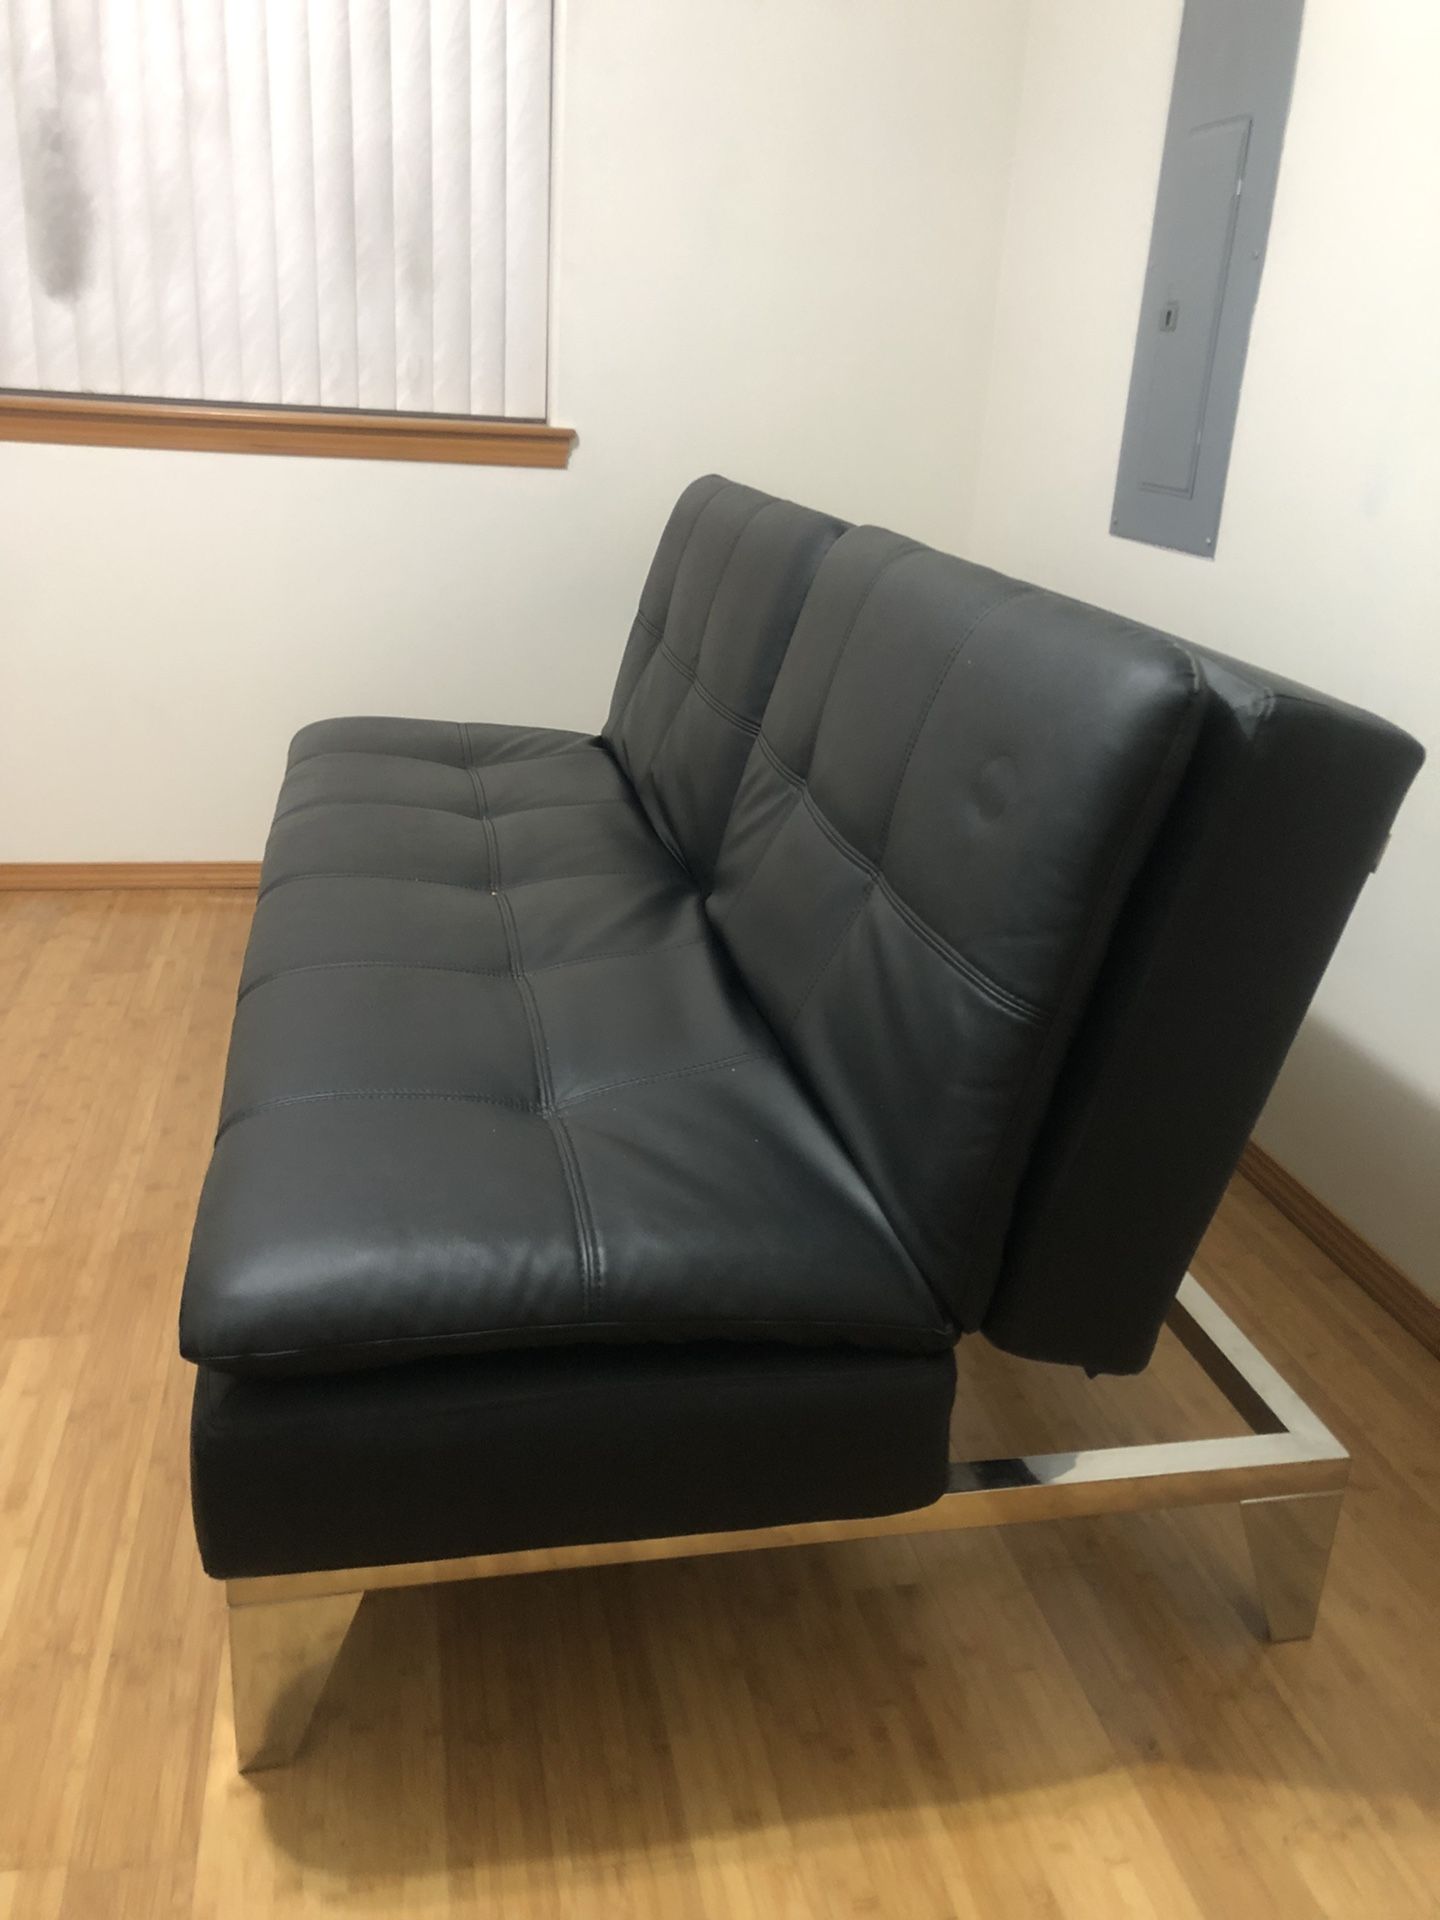 Convertible Sofa $100